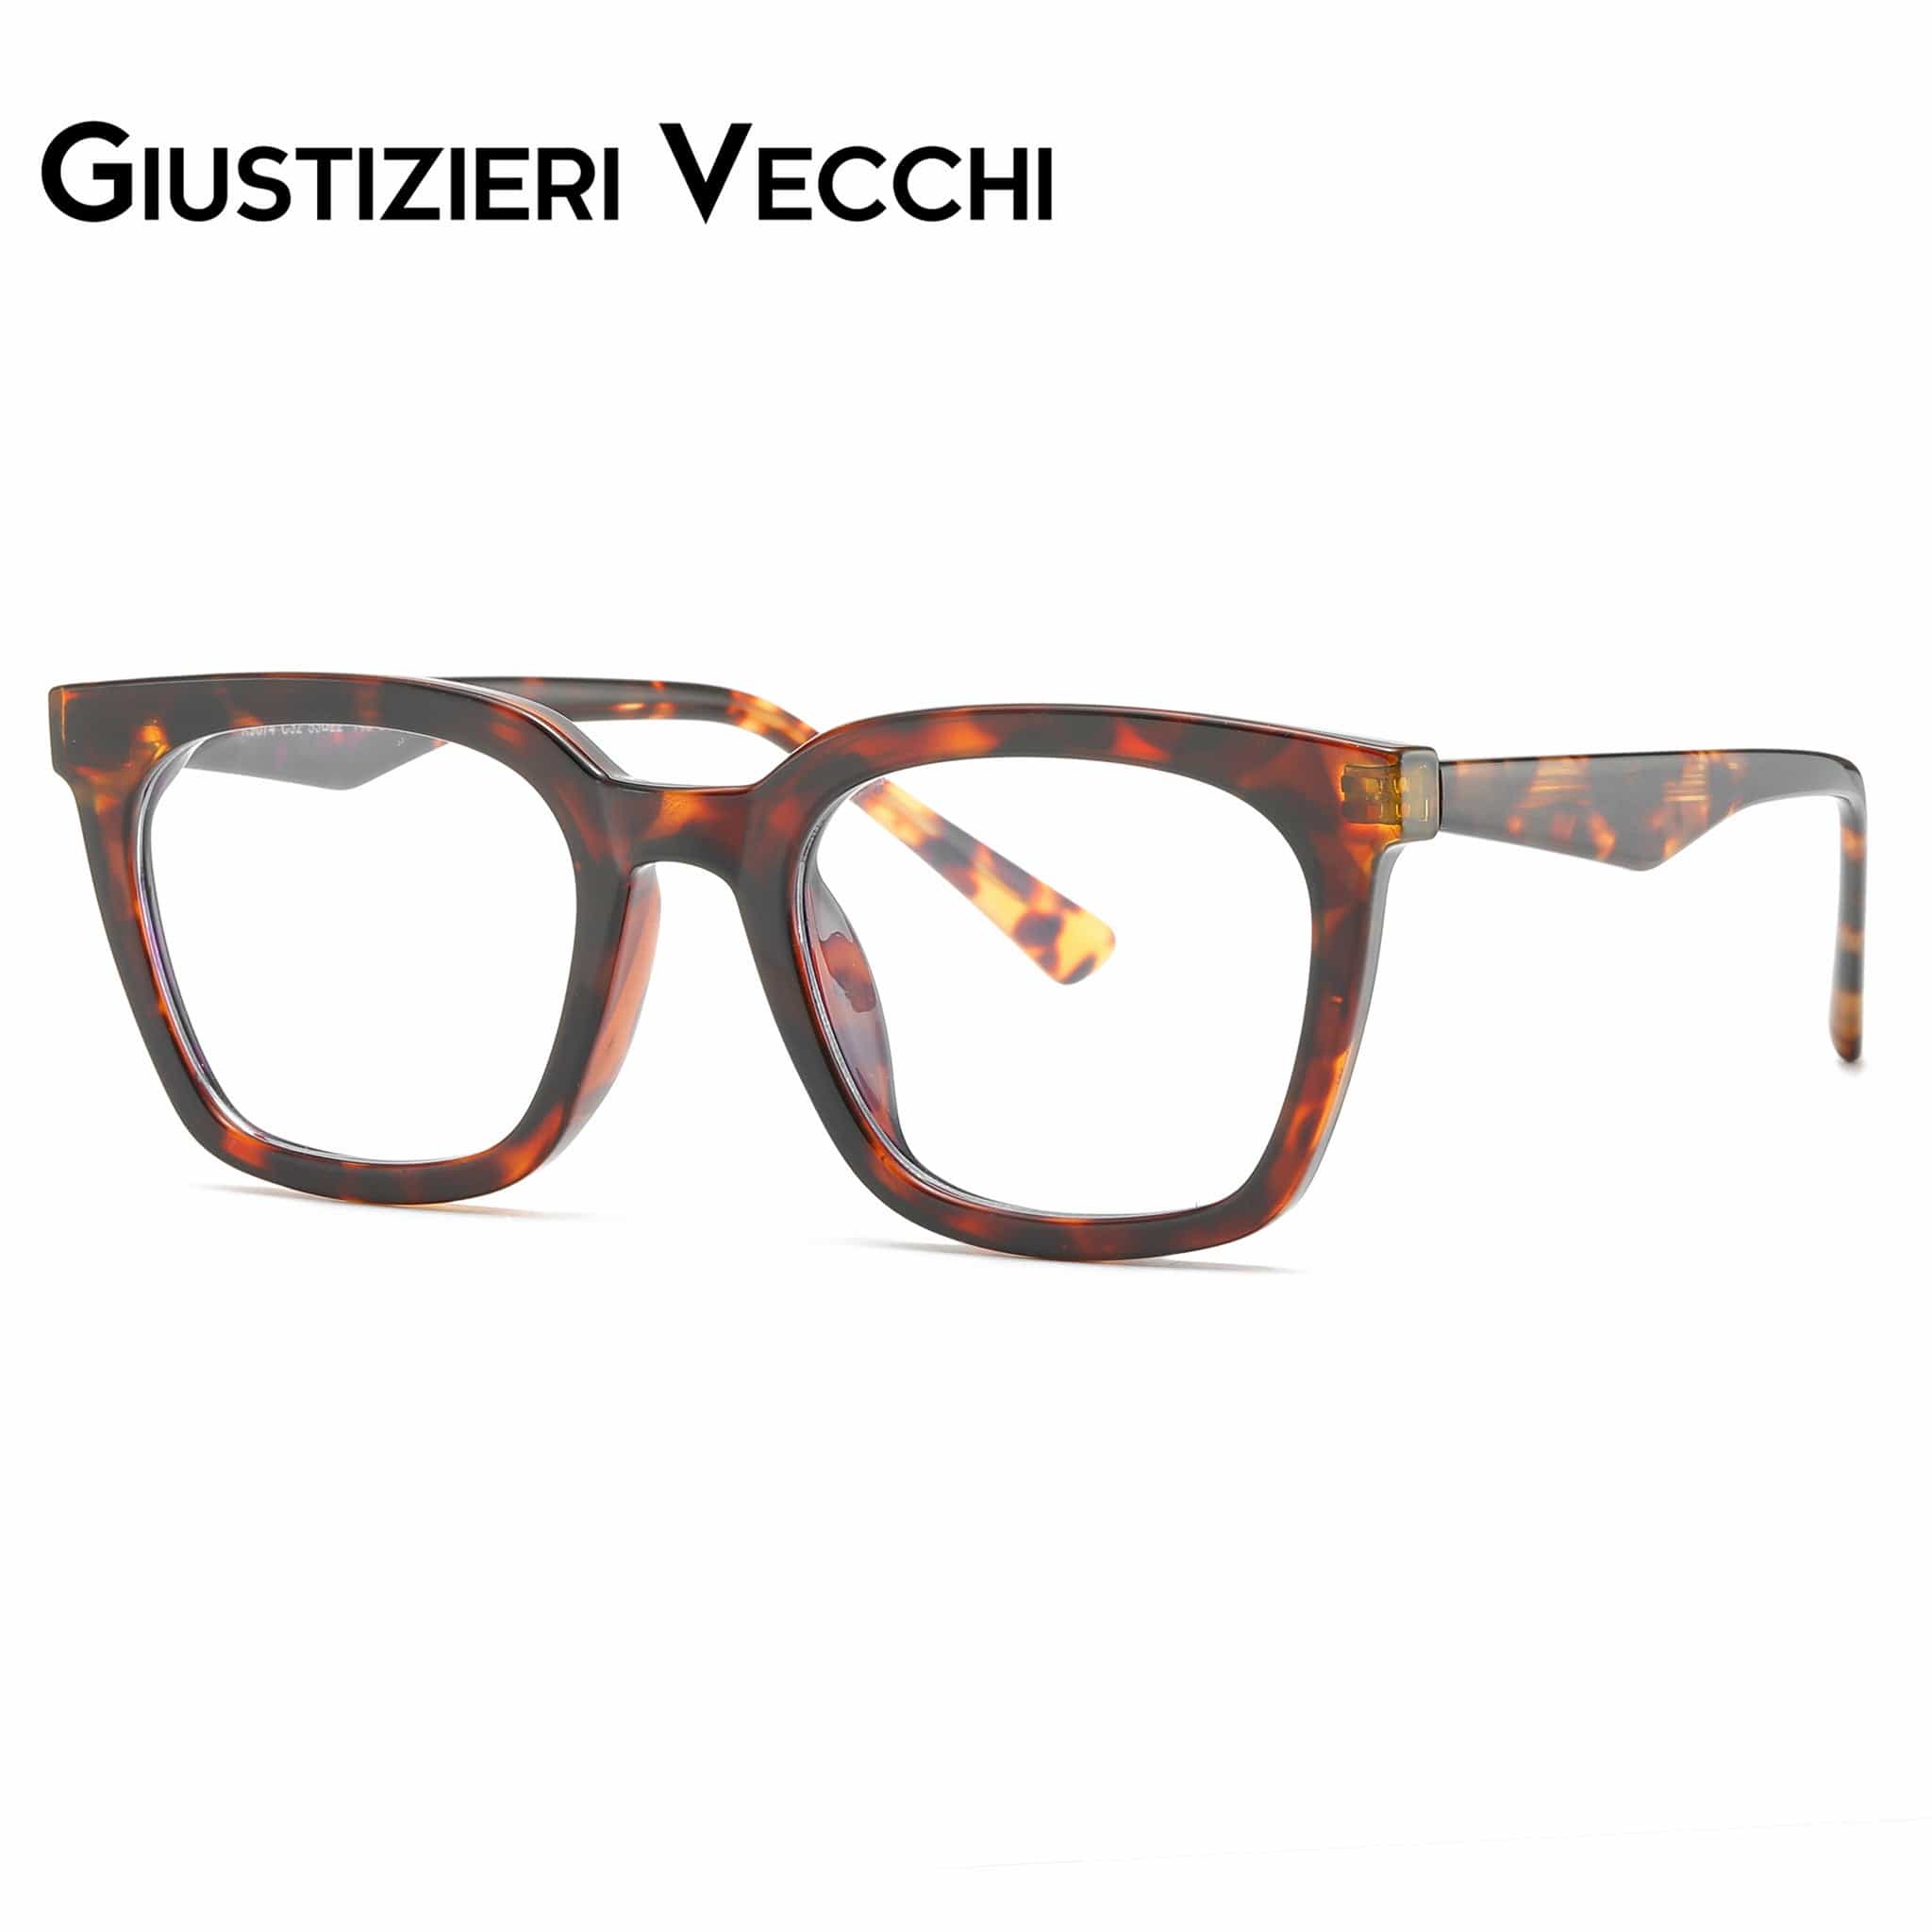 GIUSTIZIERI VECCHI Eyeglasses Medium / Merigold Tortoise PhantomPulse Tre